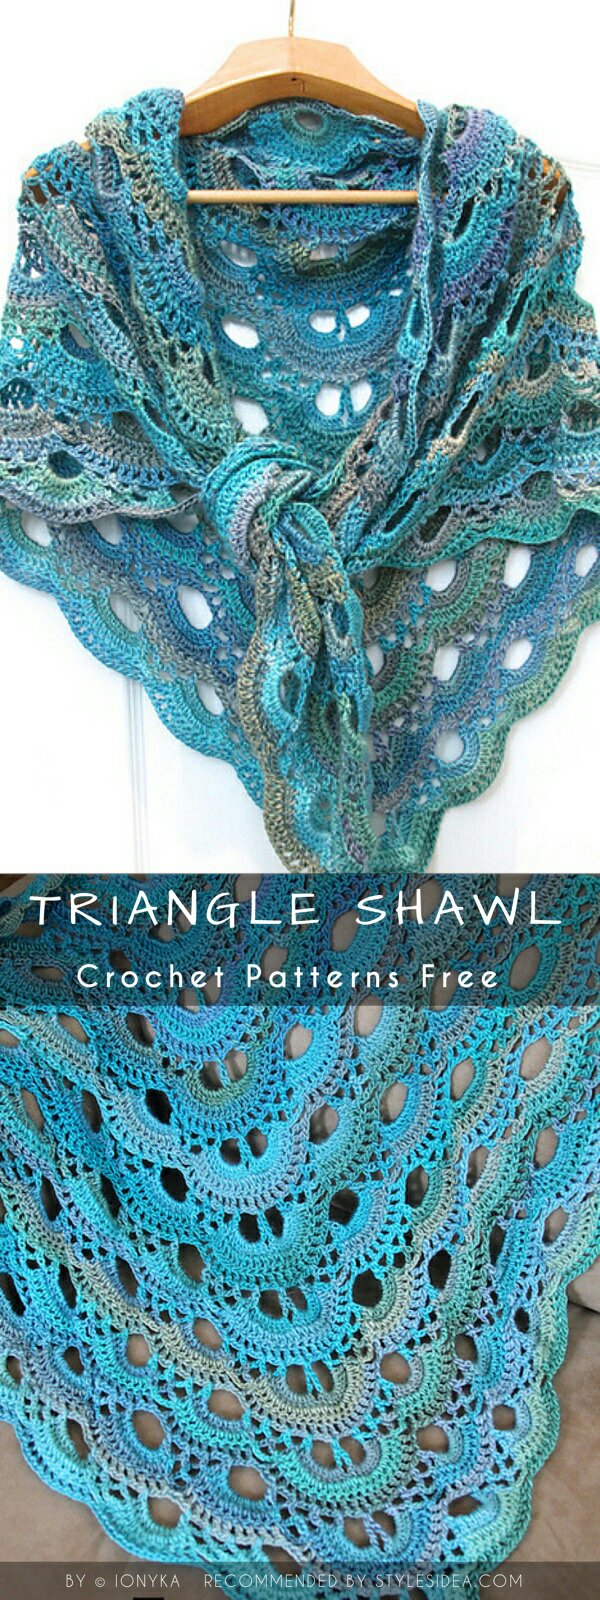 Triangle Shawl Free Crochet Pattern New Craft Works,Vodka And Orange Juice Called